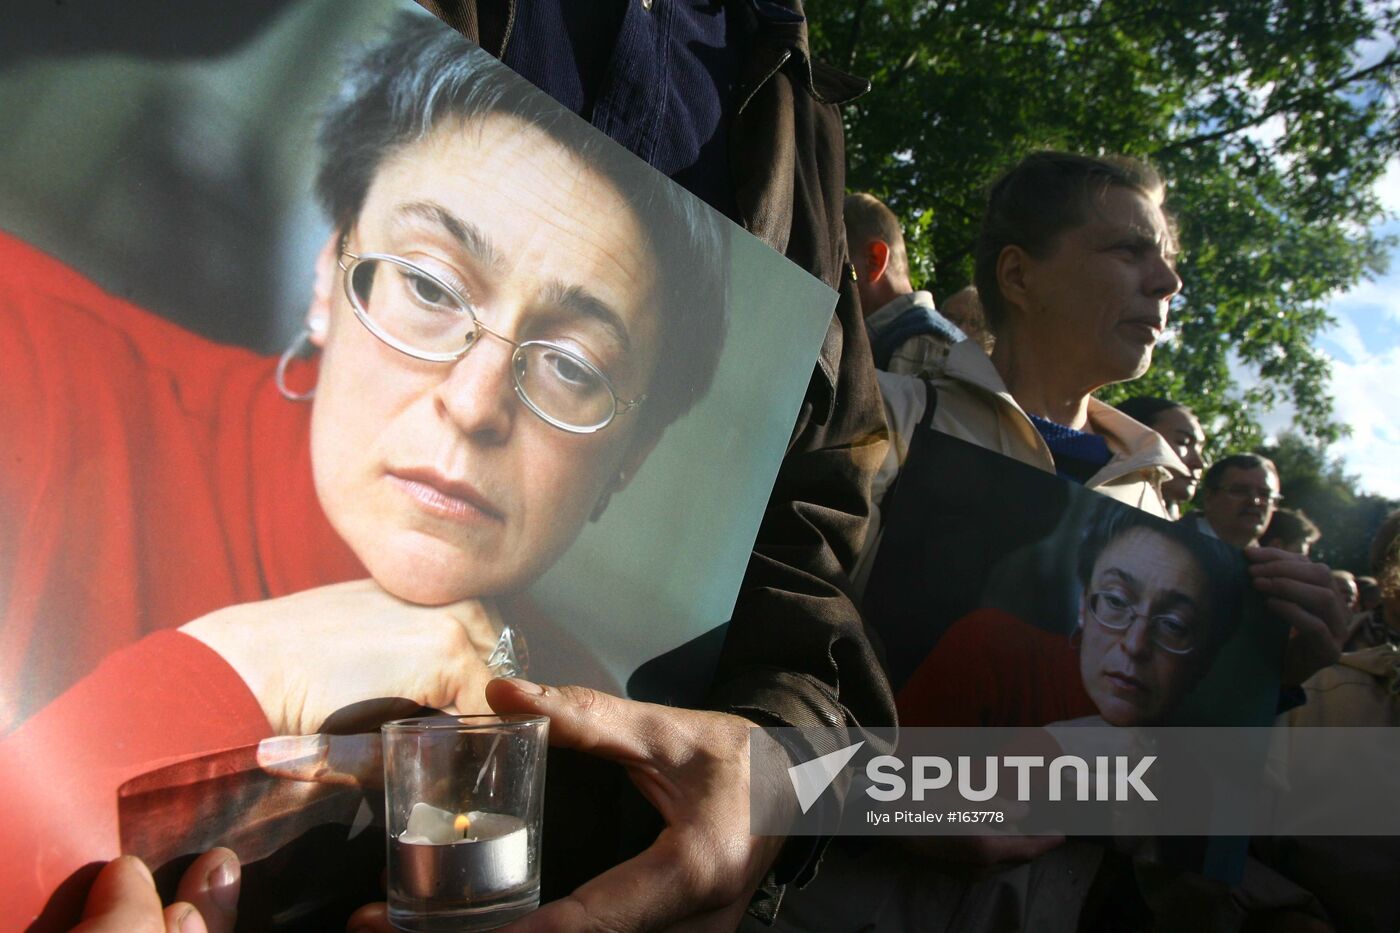 DEMONSTRATION IN MEMORY OF ANNA POLITKOVSKAYA